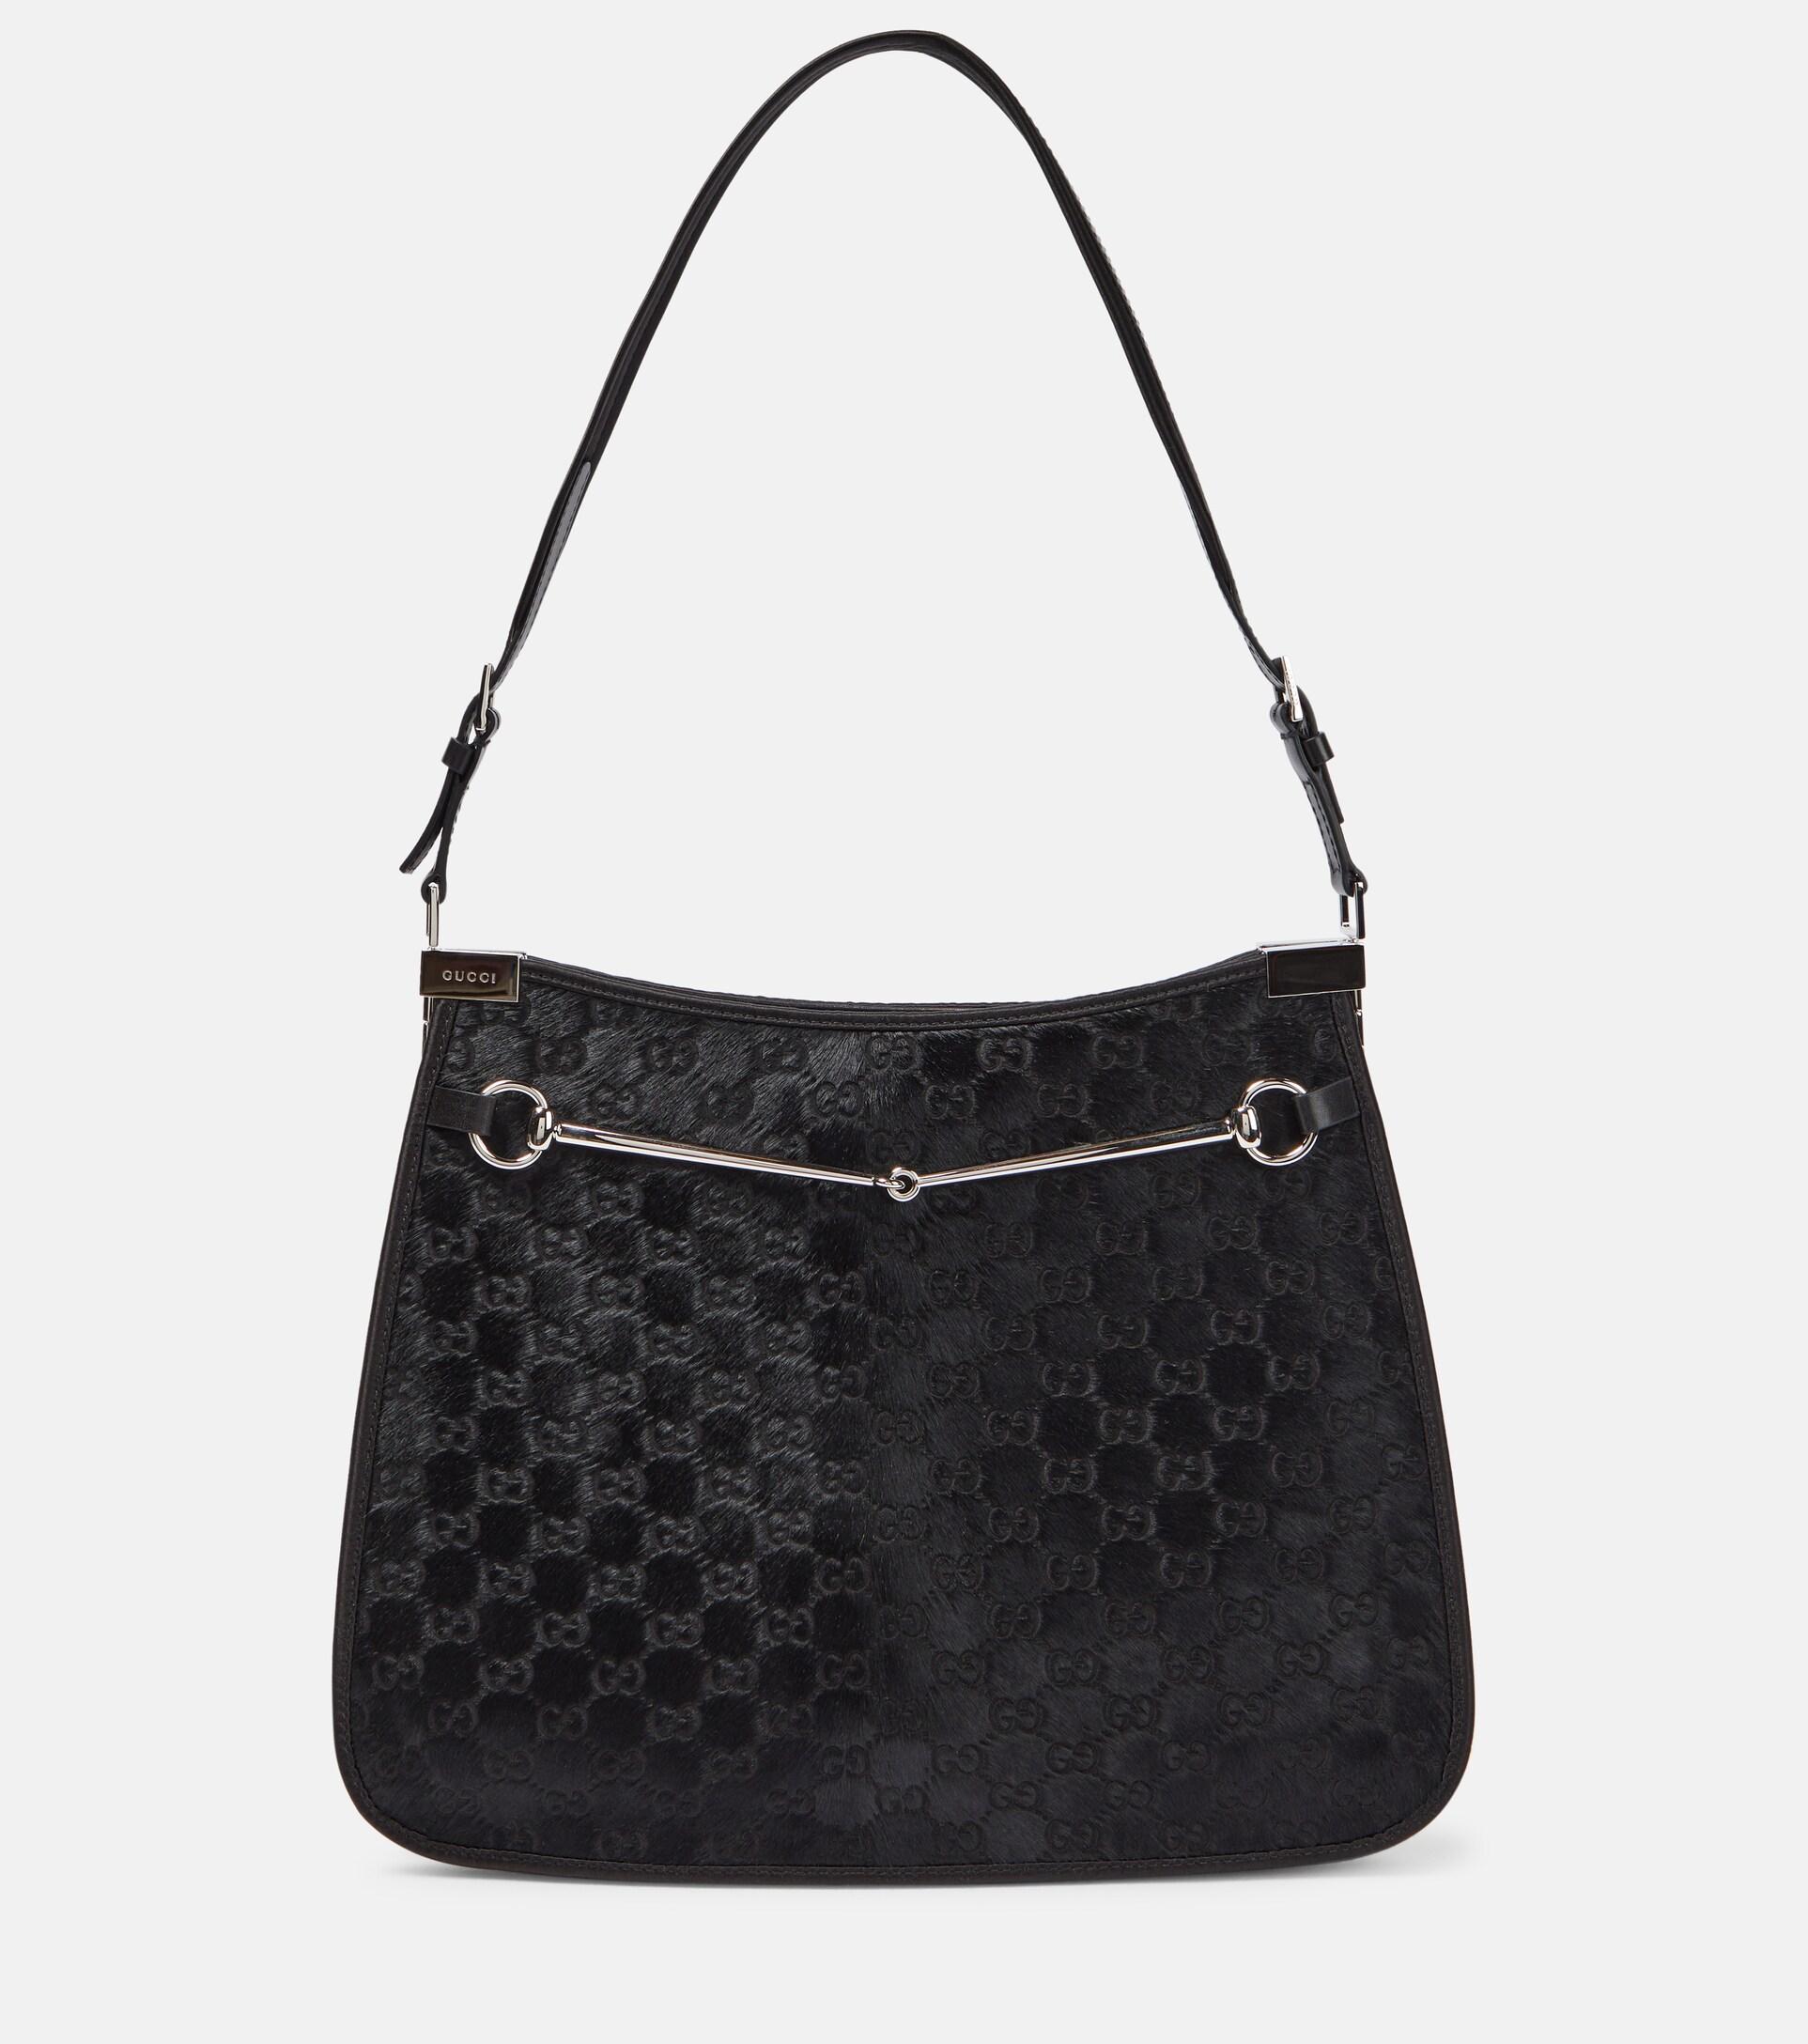 Gucci Horsebit Medium GG Calf Hair Shoulder Bag in Black | Lyst